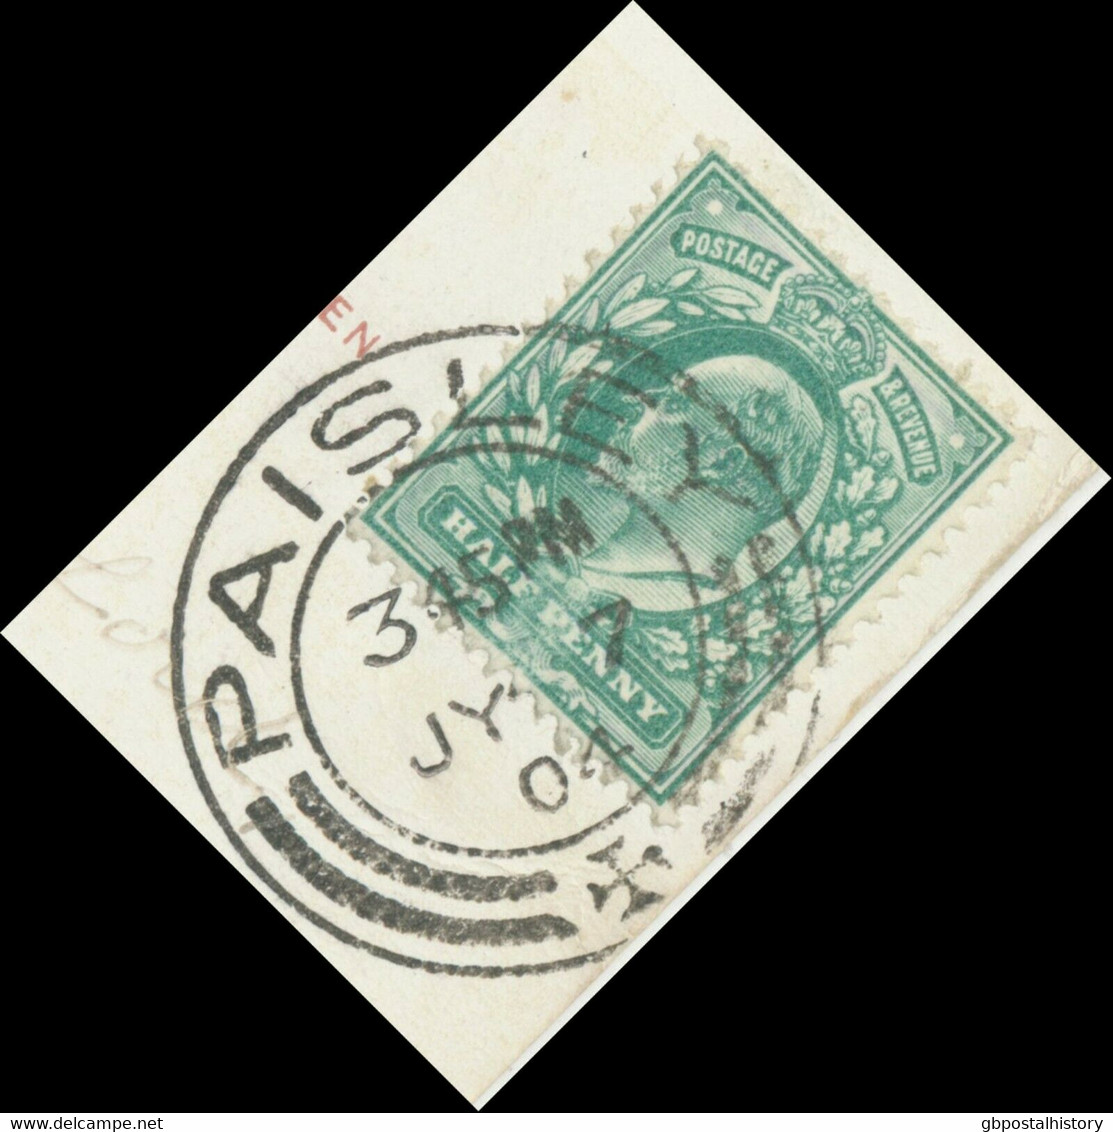 GB SCOTTISH VILLAGE POSTMARKS „PAISLEY“ Superb Strike (28mm, Time Code „3 45PM“) On VF Postcard (Marie Studholme) 1904 - Scozia